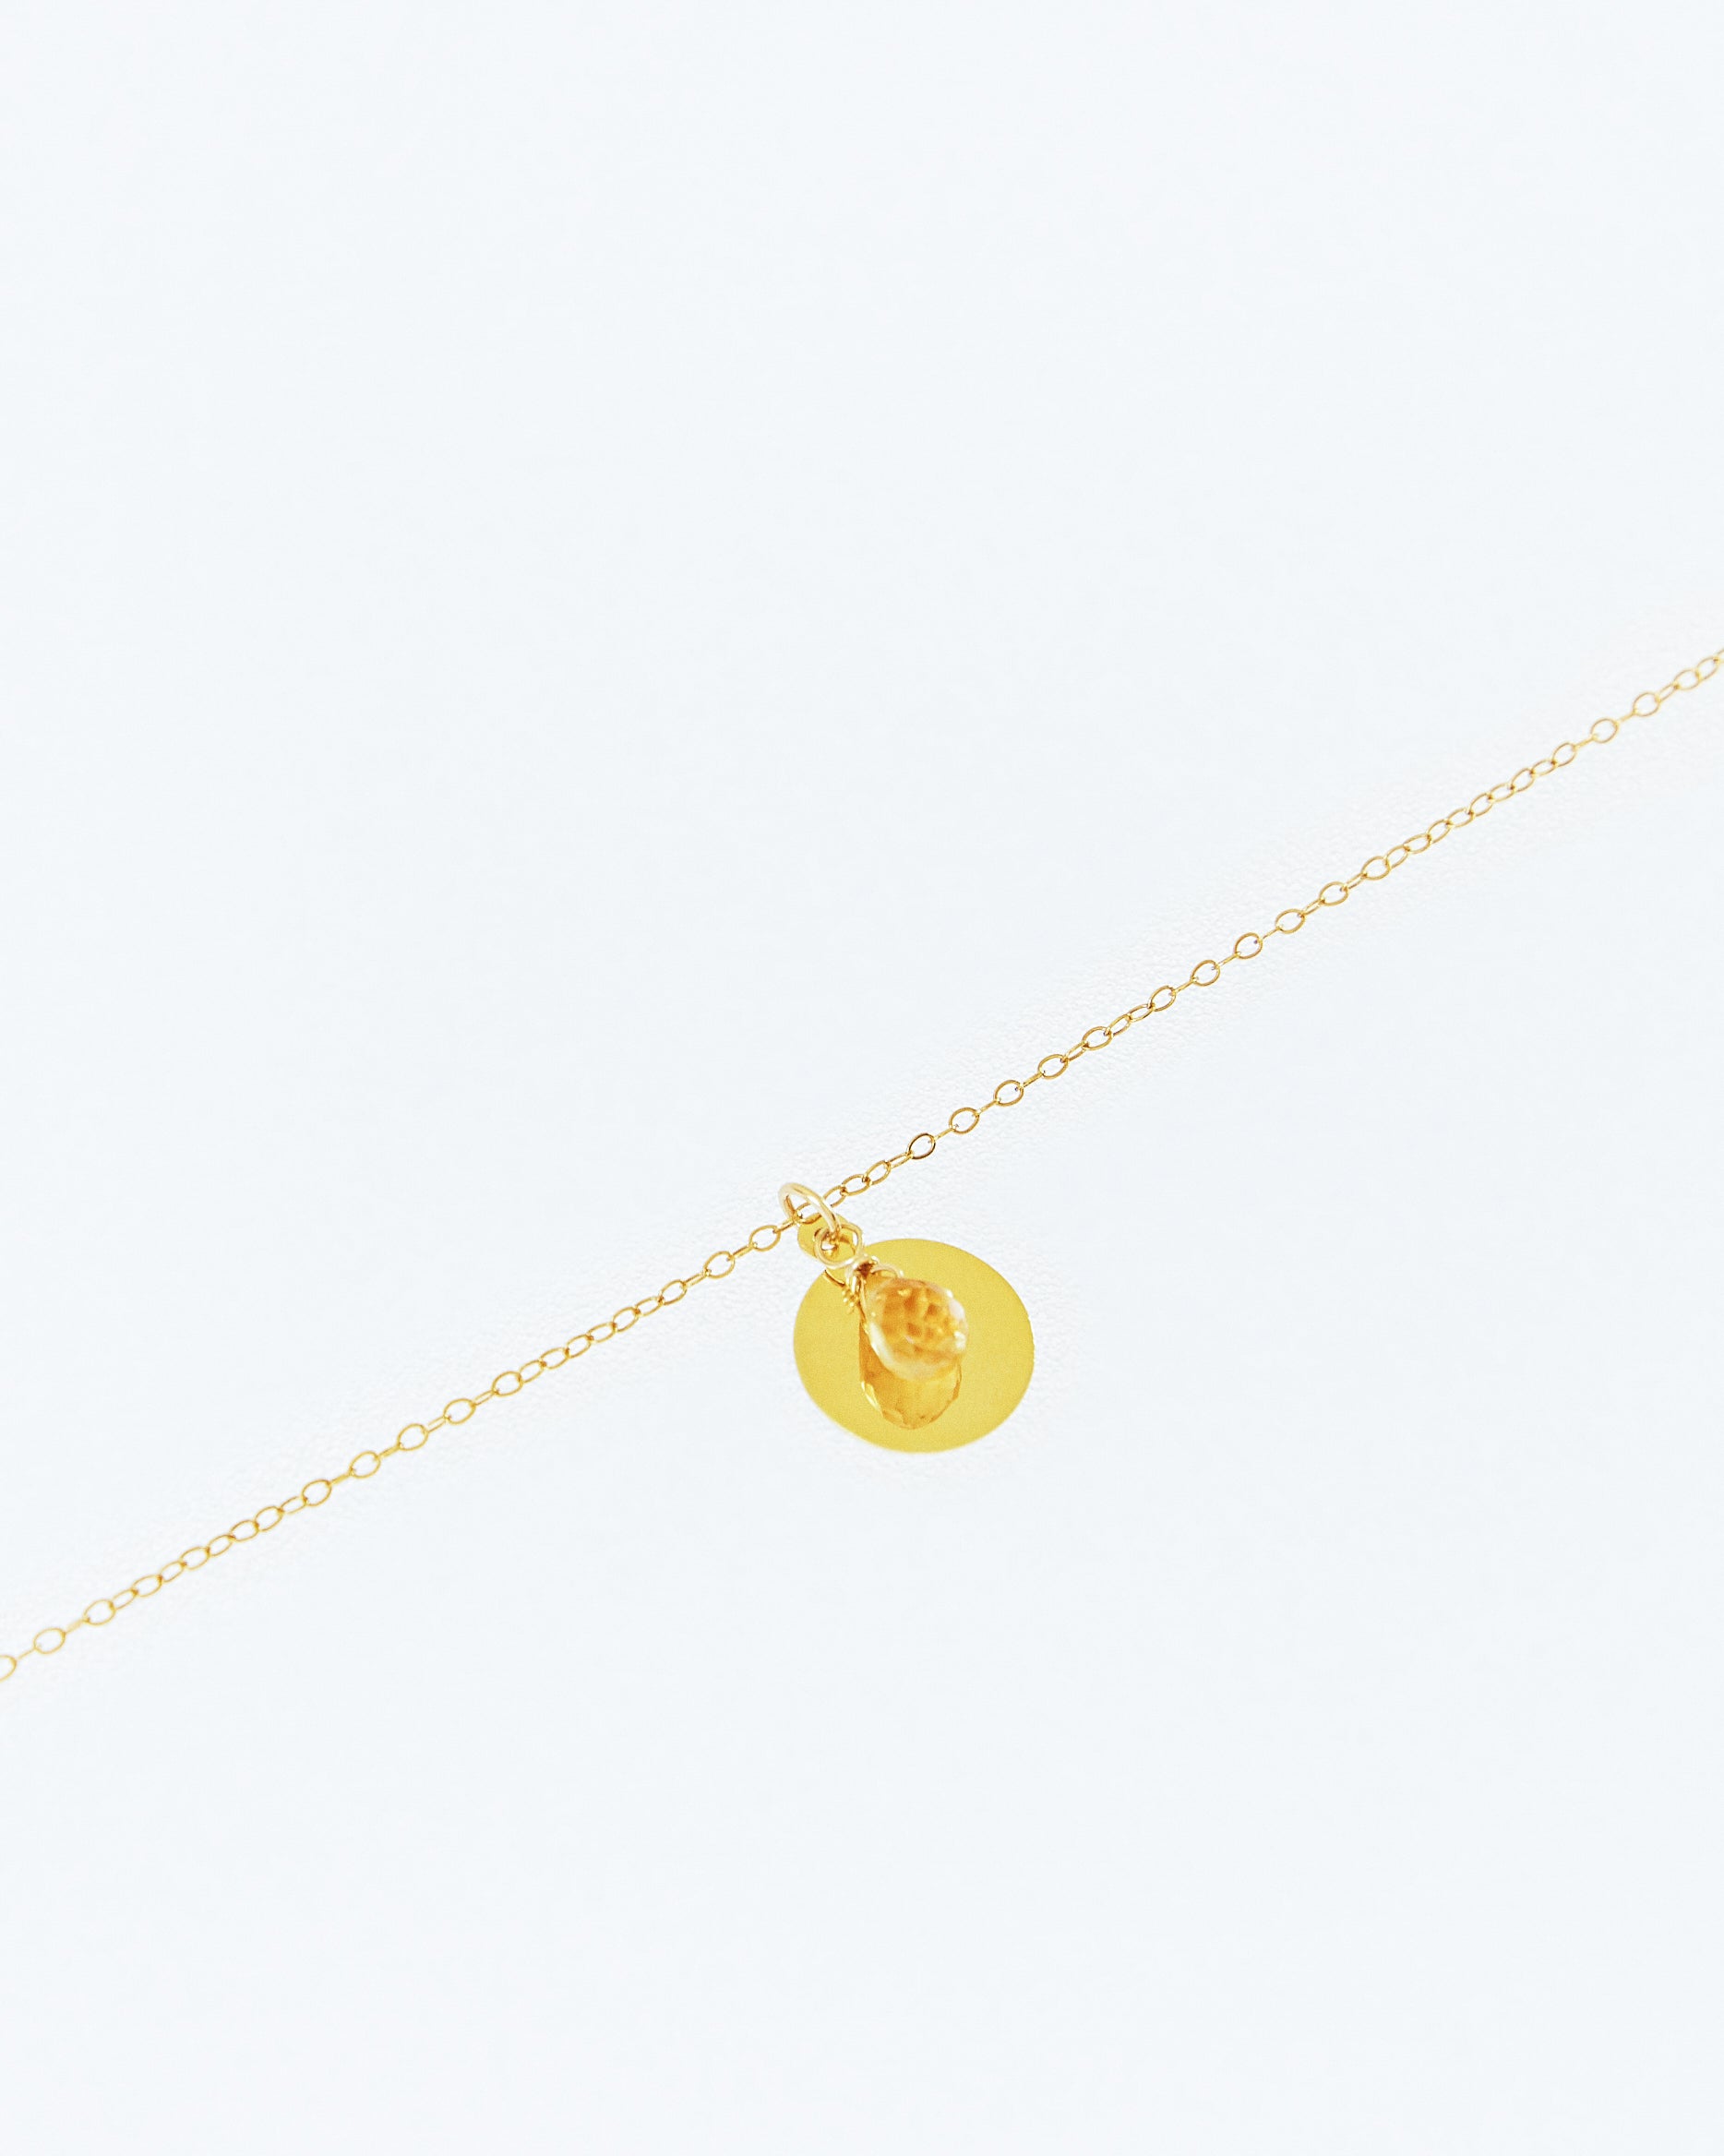 14K Gold Filled Citrine Necklace | Inspiration Her Jewellery